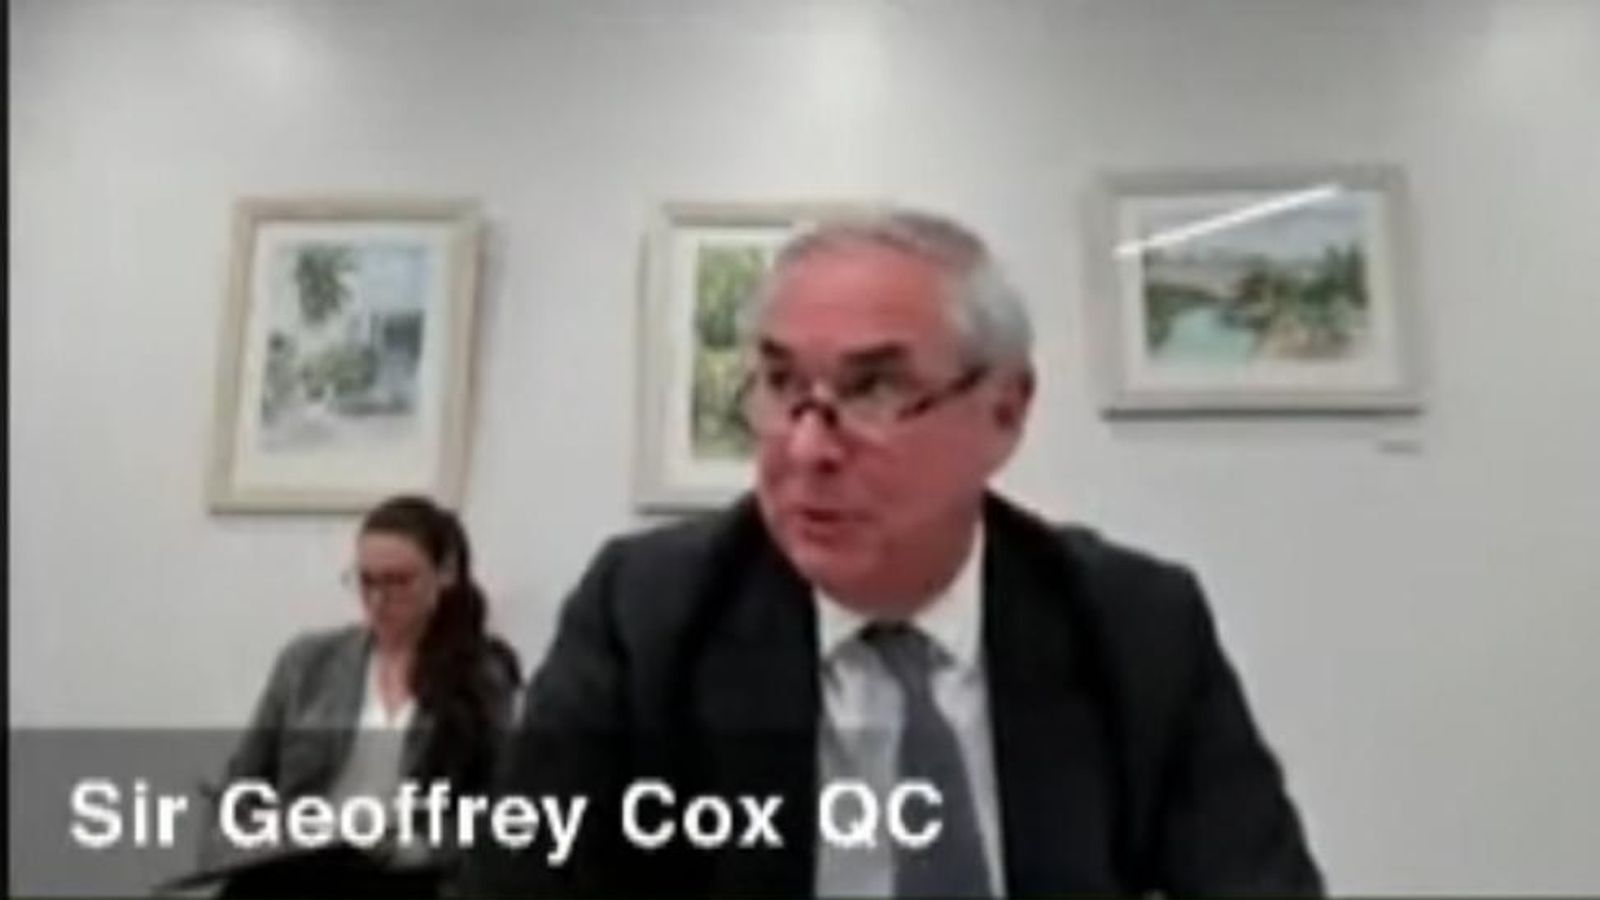 Buruh meminta pengawas anti-bajingan untuk menyelidiki Sir Geoffrey Cox atas penyalahgunaan klaim kantor |  Berita Politik